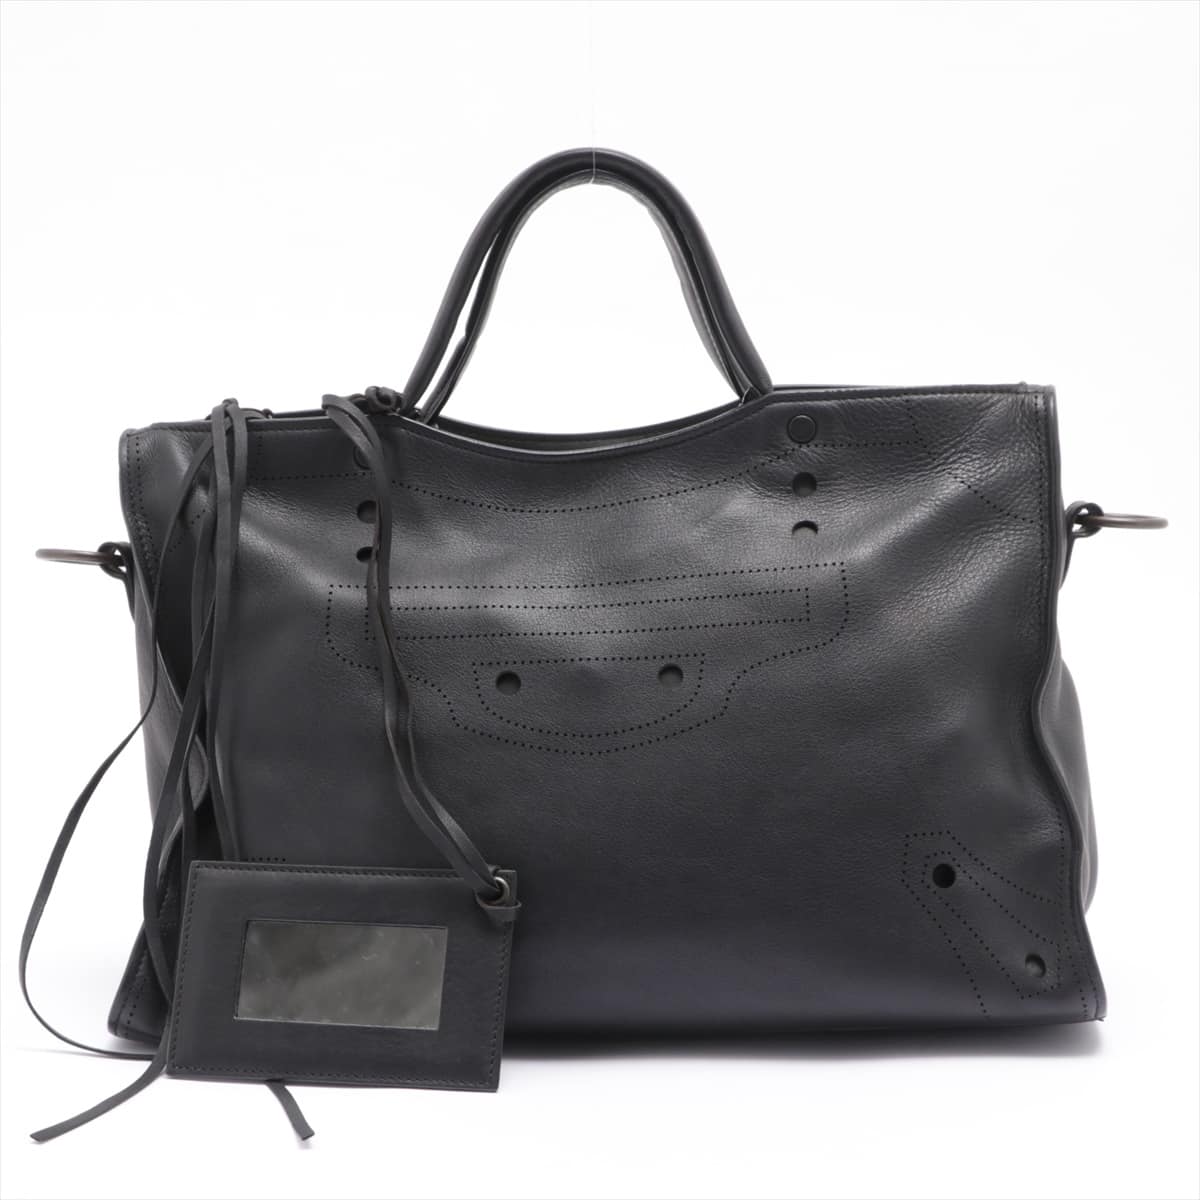 Balenciaga Blackout City Leather 2way handbag Black 443514 With mirror